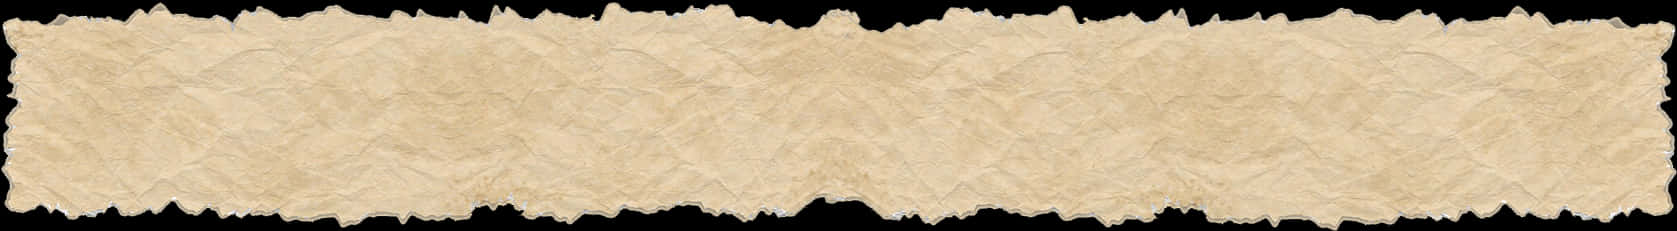 Horizontal Torn Paper Edge Texture PNG image